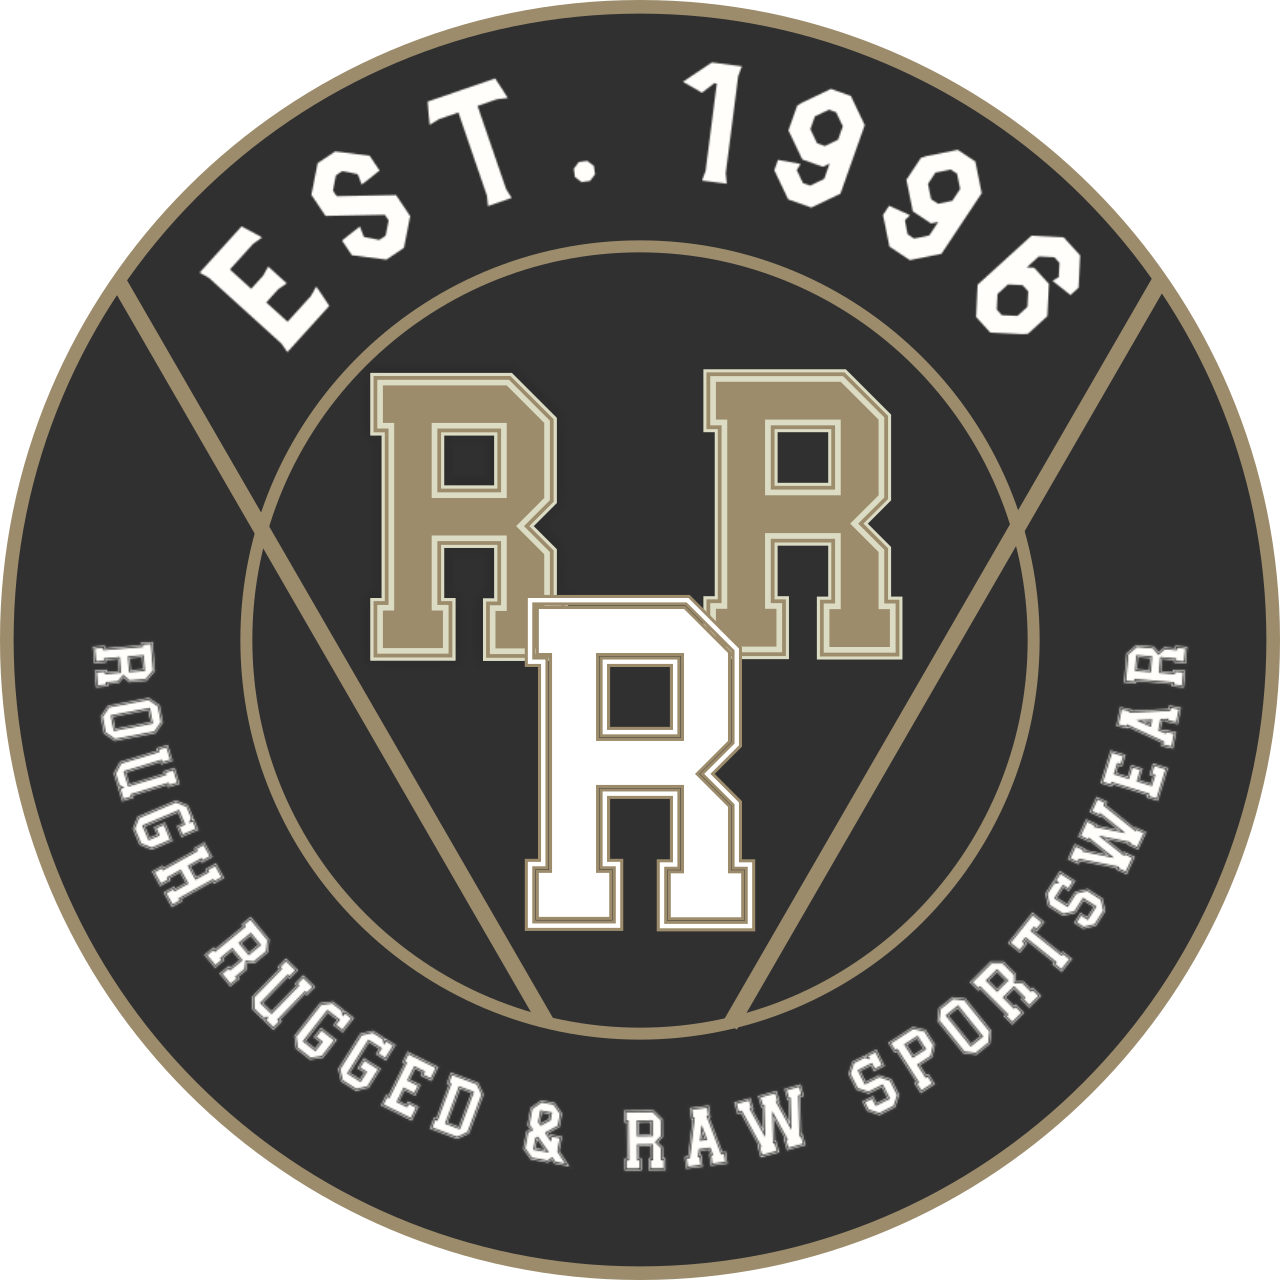 Rough Rugged & Raw Sportswear's web page